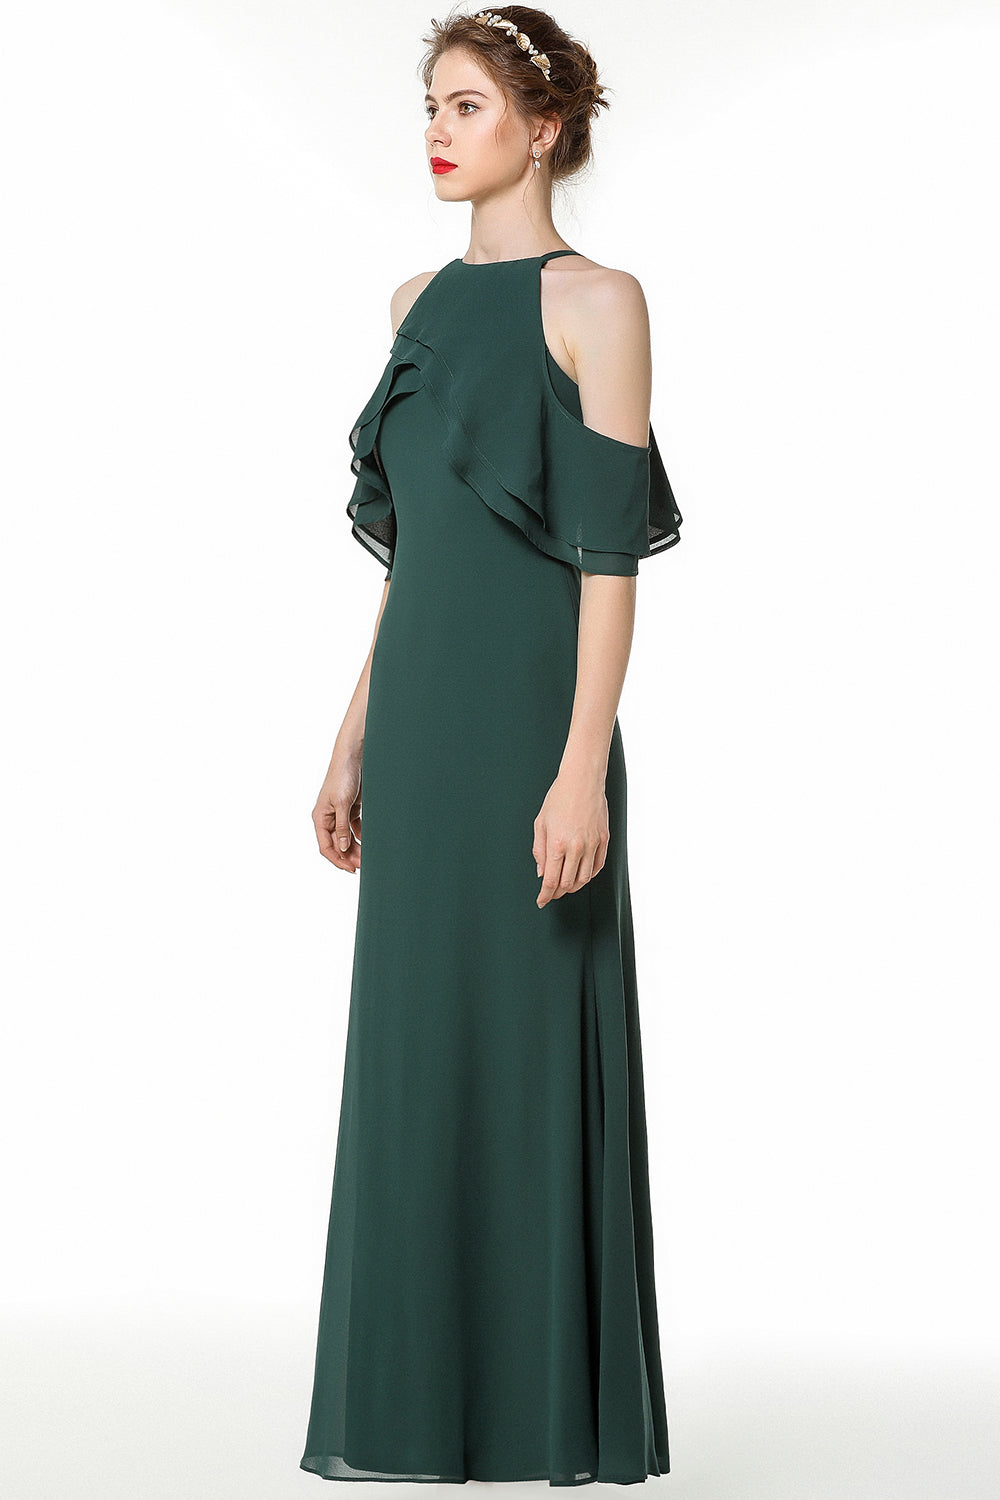 Affordable Cold-shoulder Ruffle Dark Green Bridesmaid Dresses Online-27dress